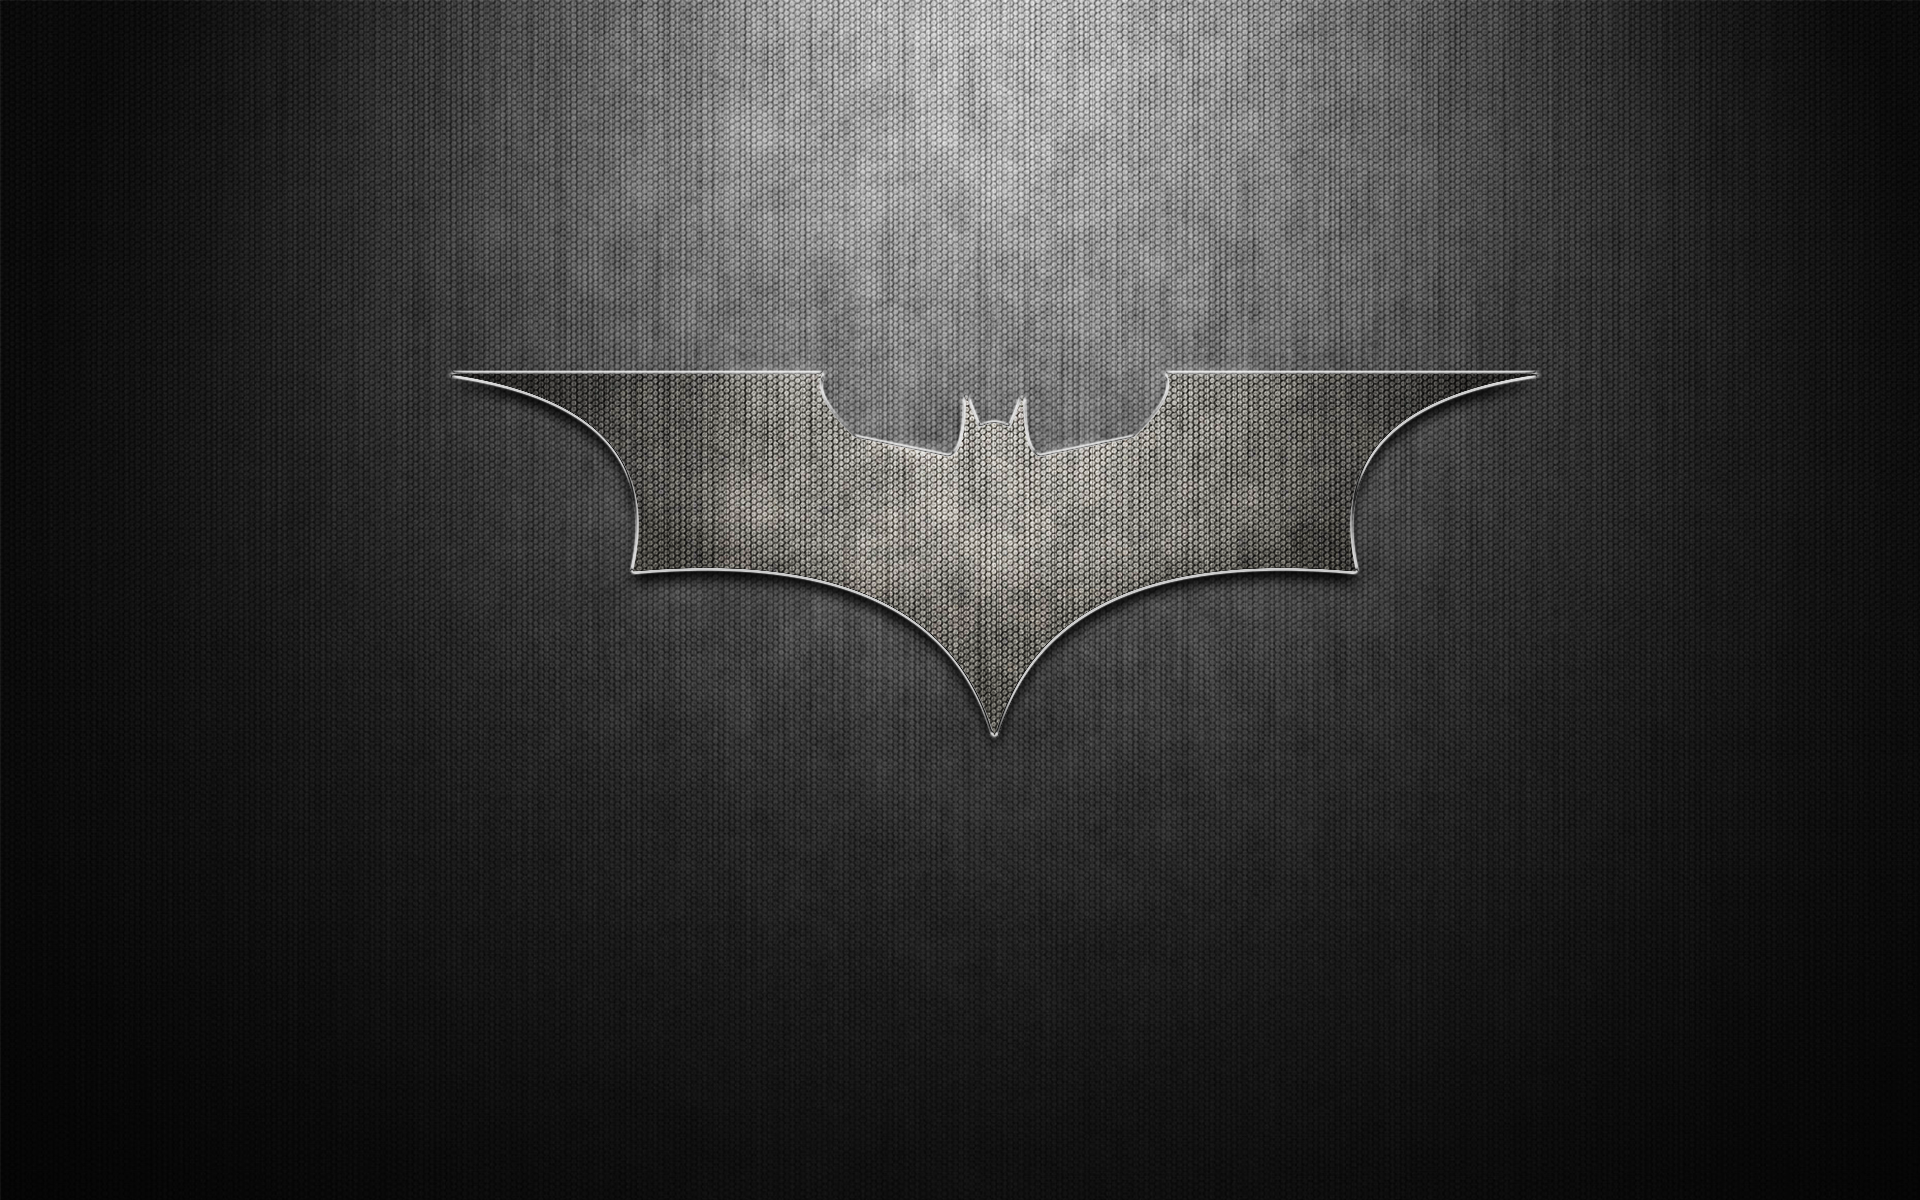 Batman logo 1080P 2K 4K 5K HD wallpapers free download  Wallpaper Flare